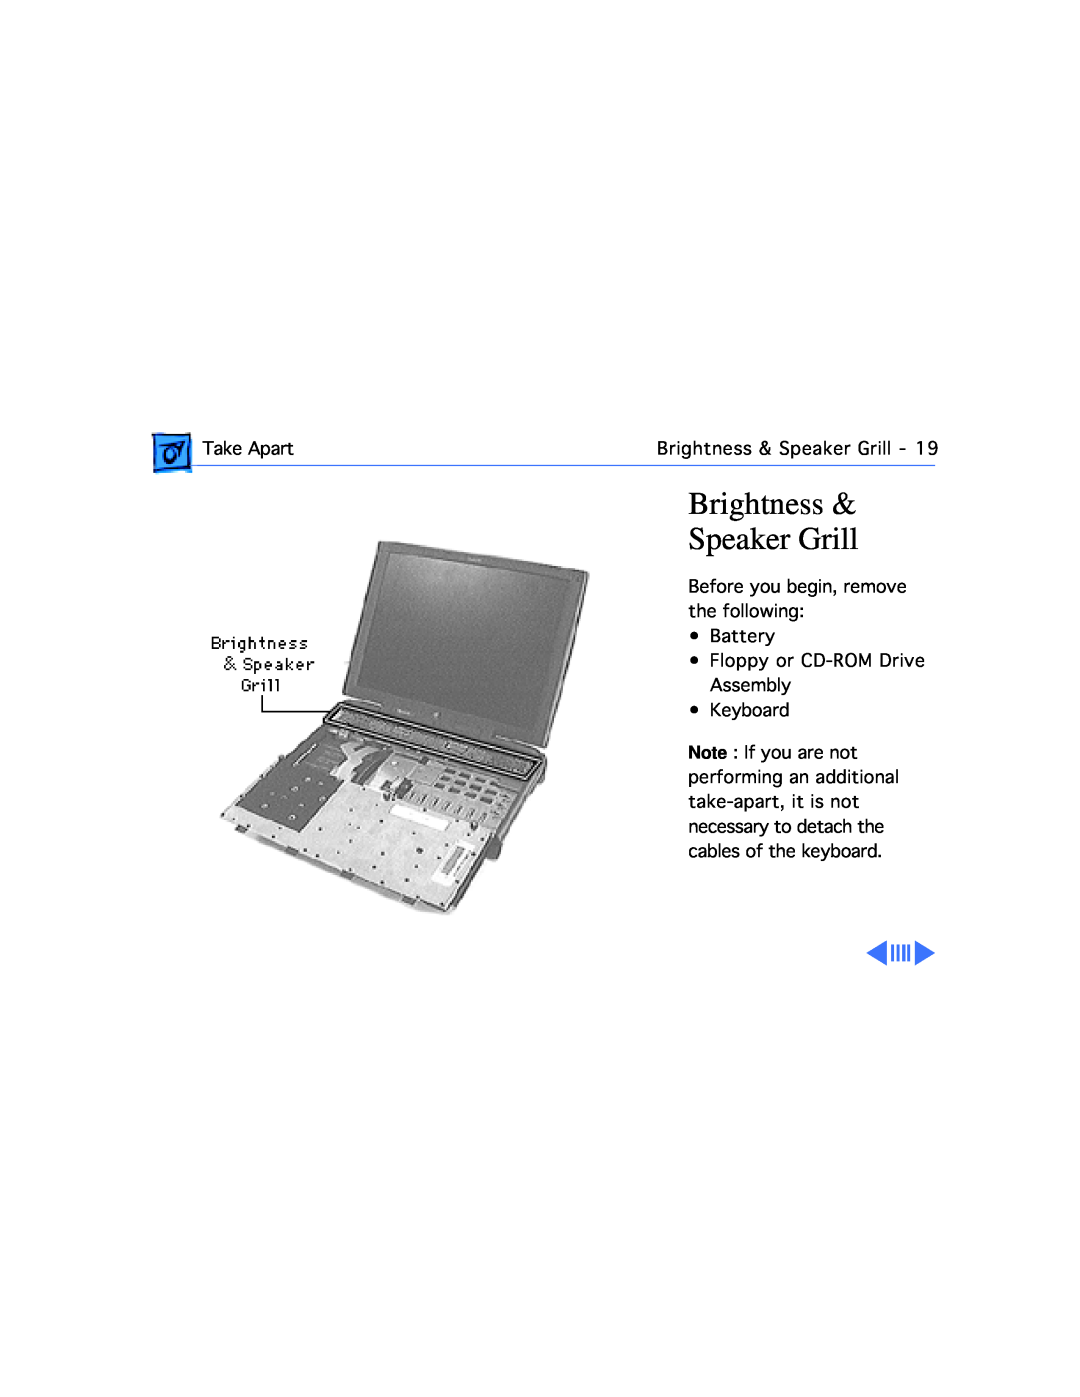 Apple G3 manual Brightness Speaker Grill, Take ApartBrightness & Speaker Grill, Floppy or CD-ROM Drive Assembly Keyboard 